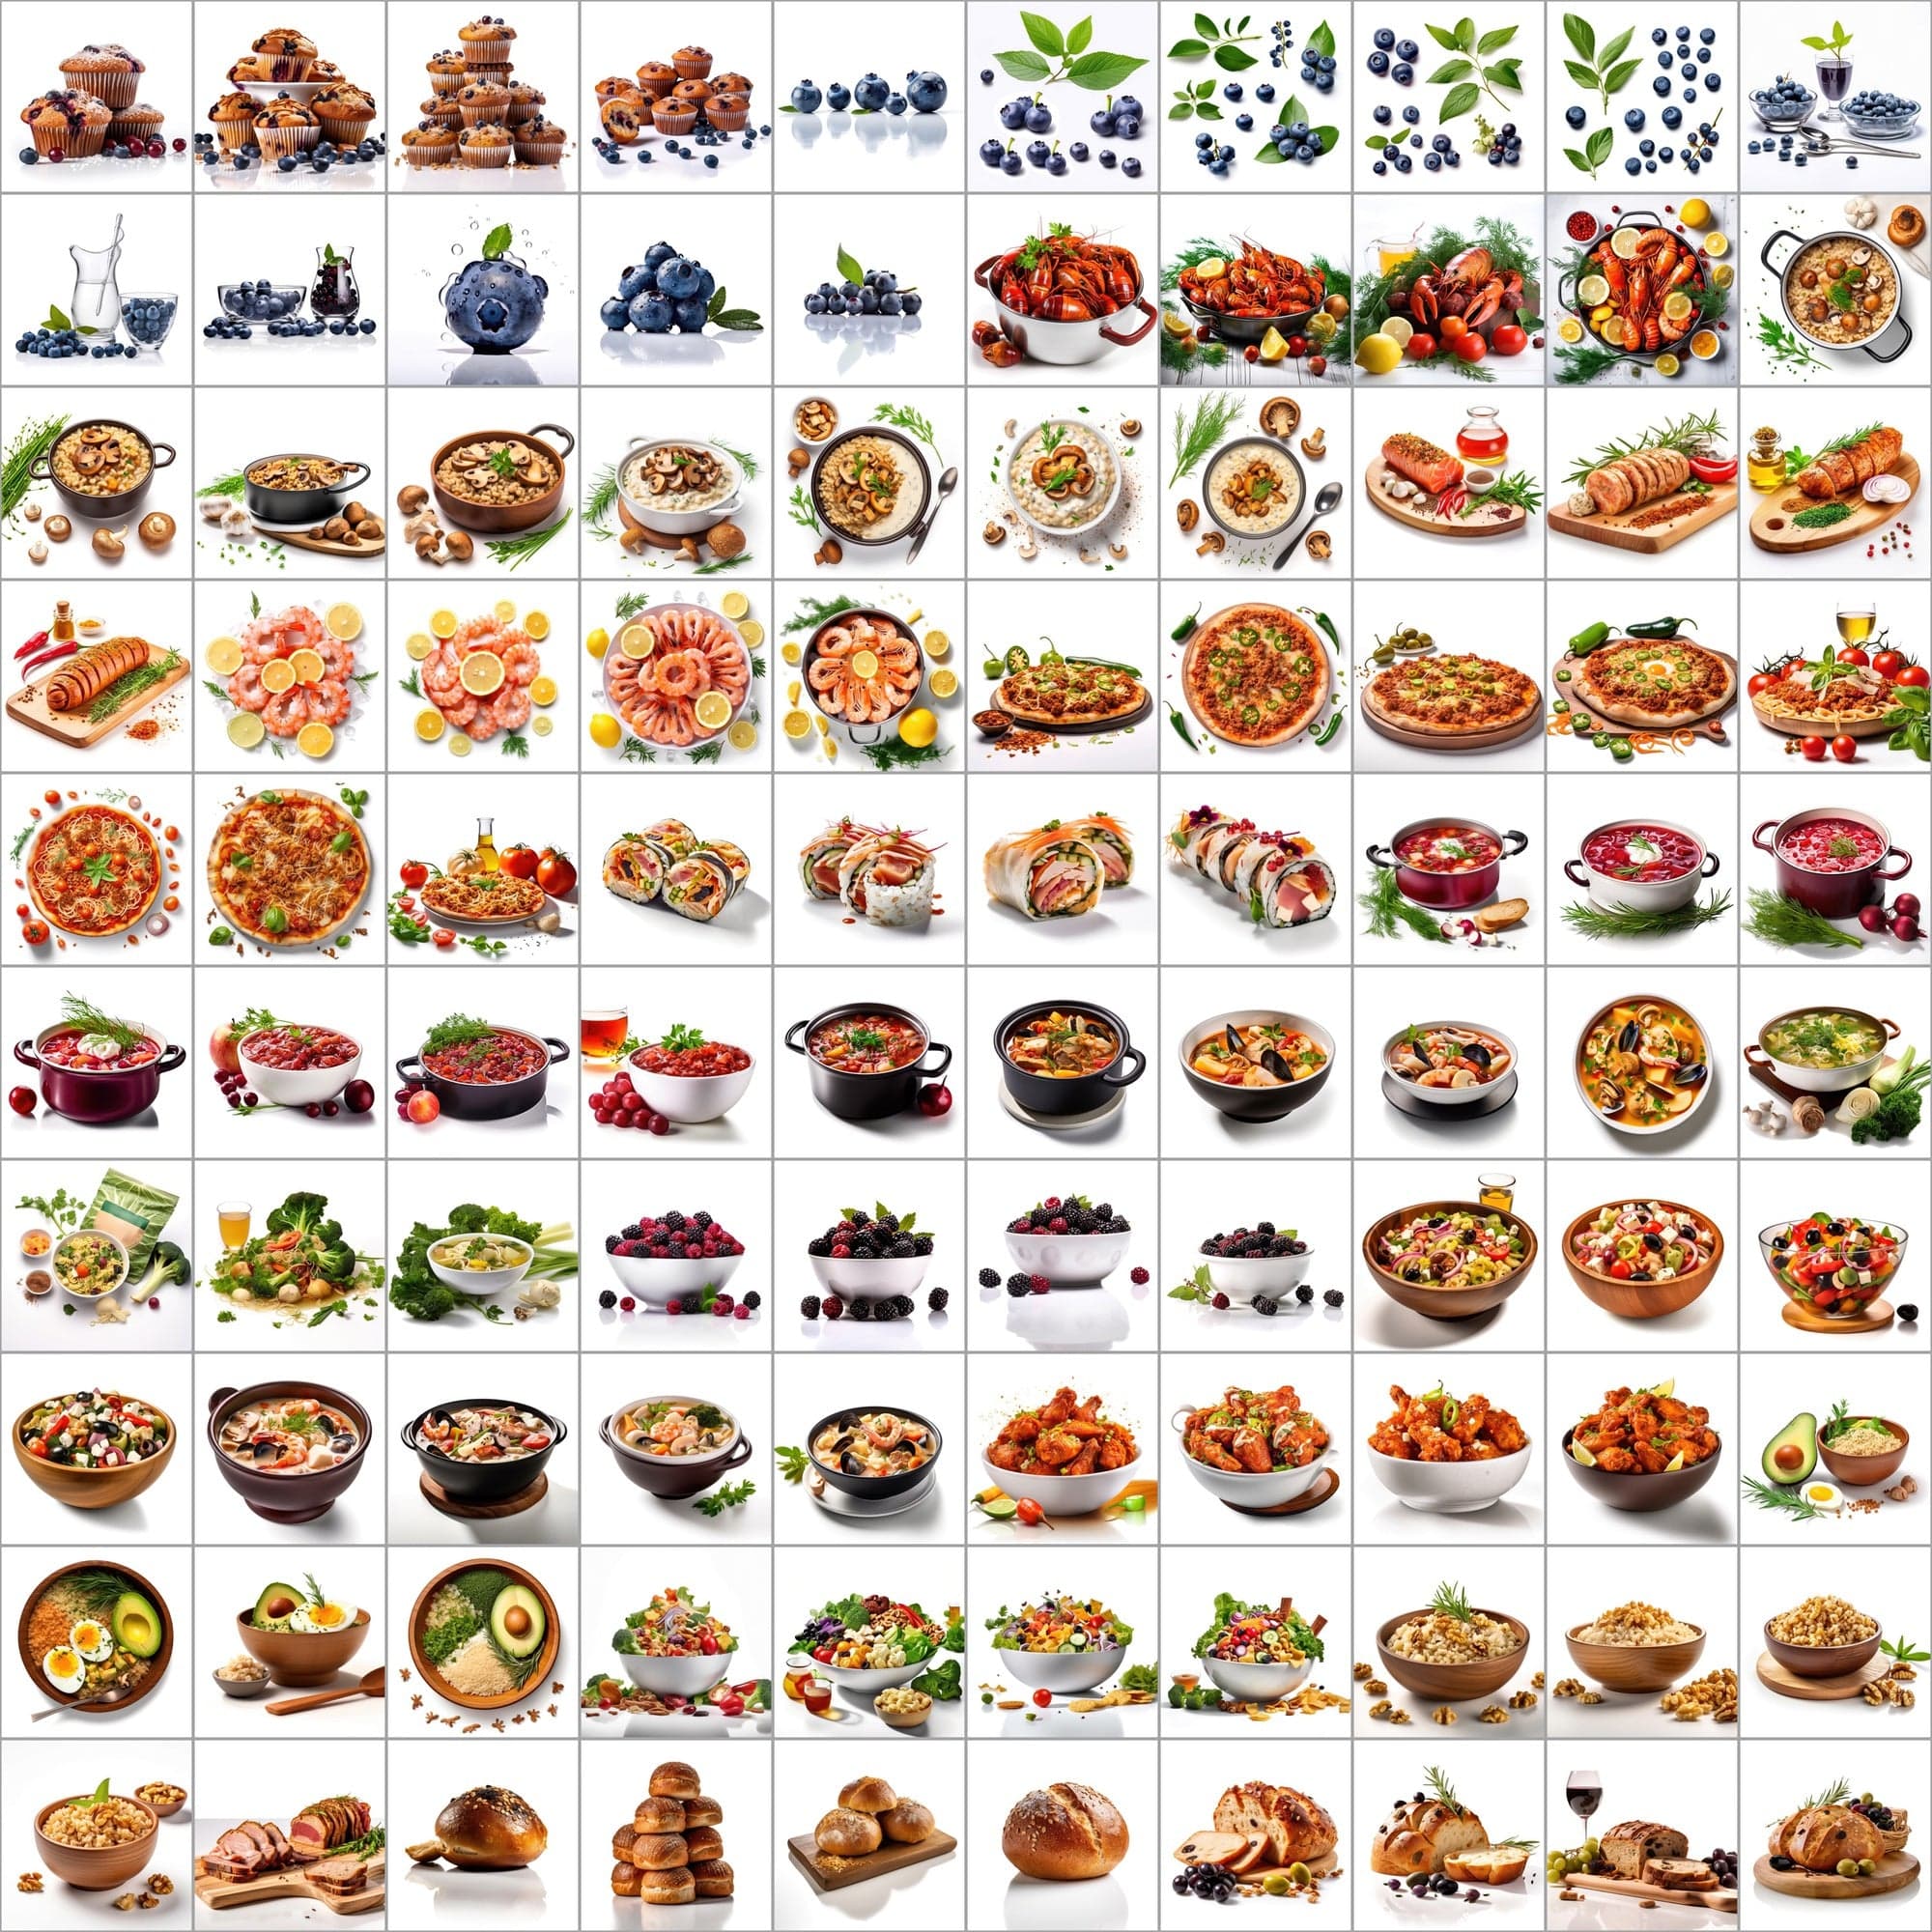 Exclusive Food Image Mega Bundle: 18,000 Exquisite Food Images Digital Download Sumobundle